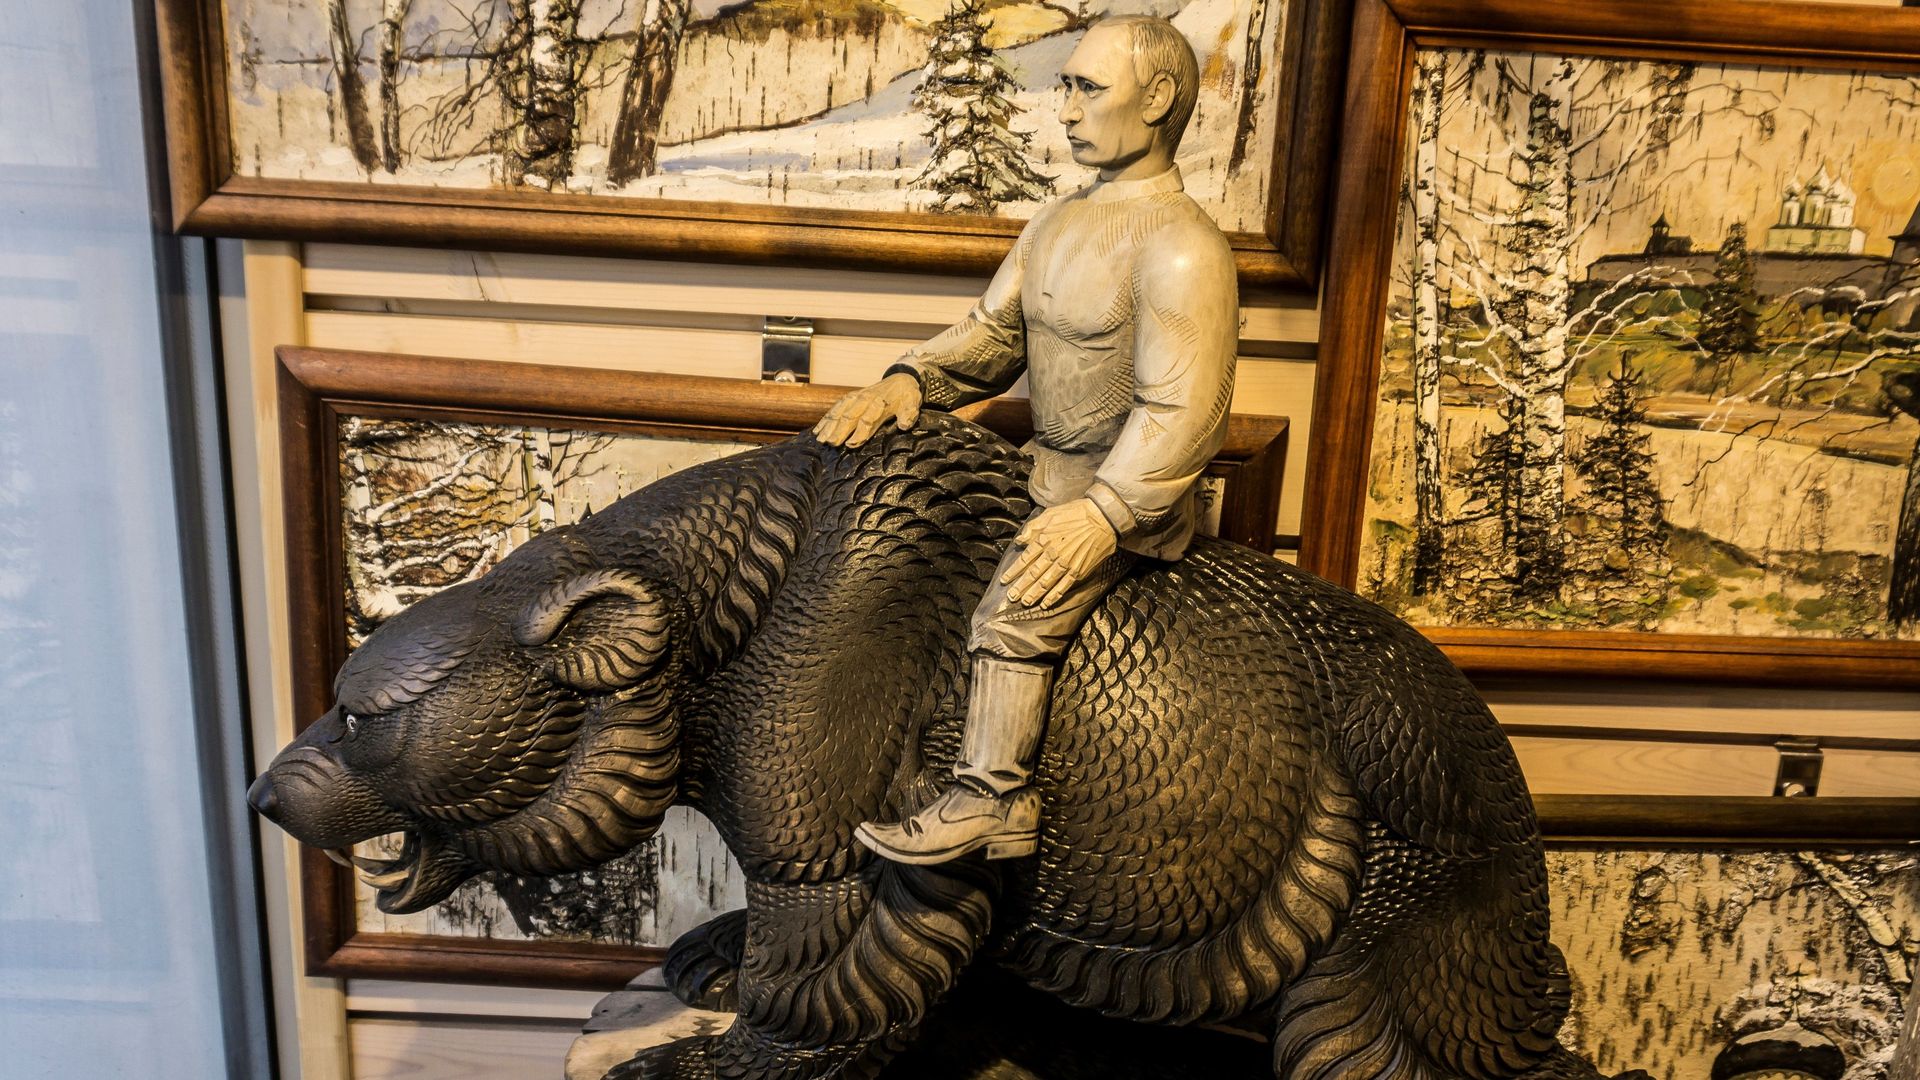 A sculpture of Vladimir Putin riding a bear.